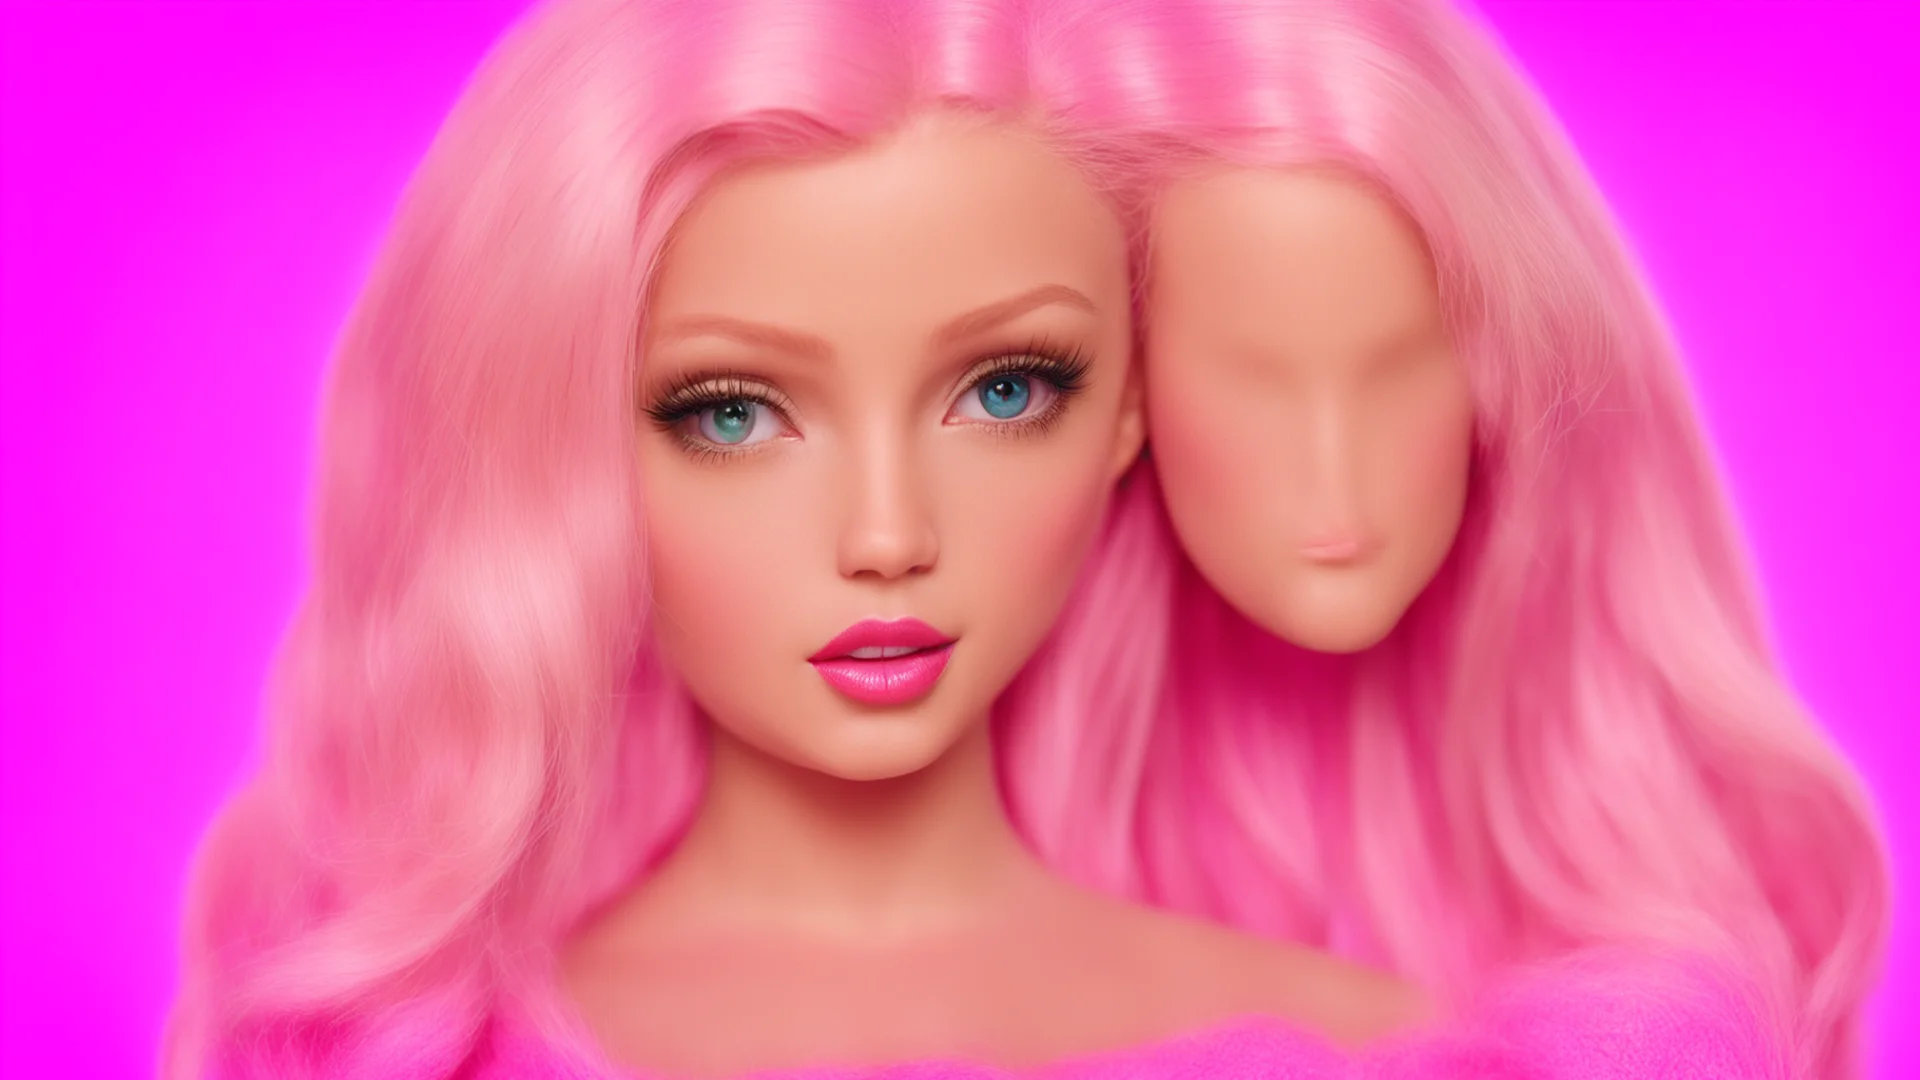 aiamazing barbie awesome portrait 2 wide